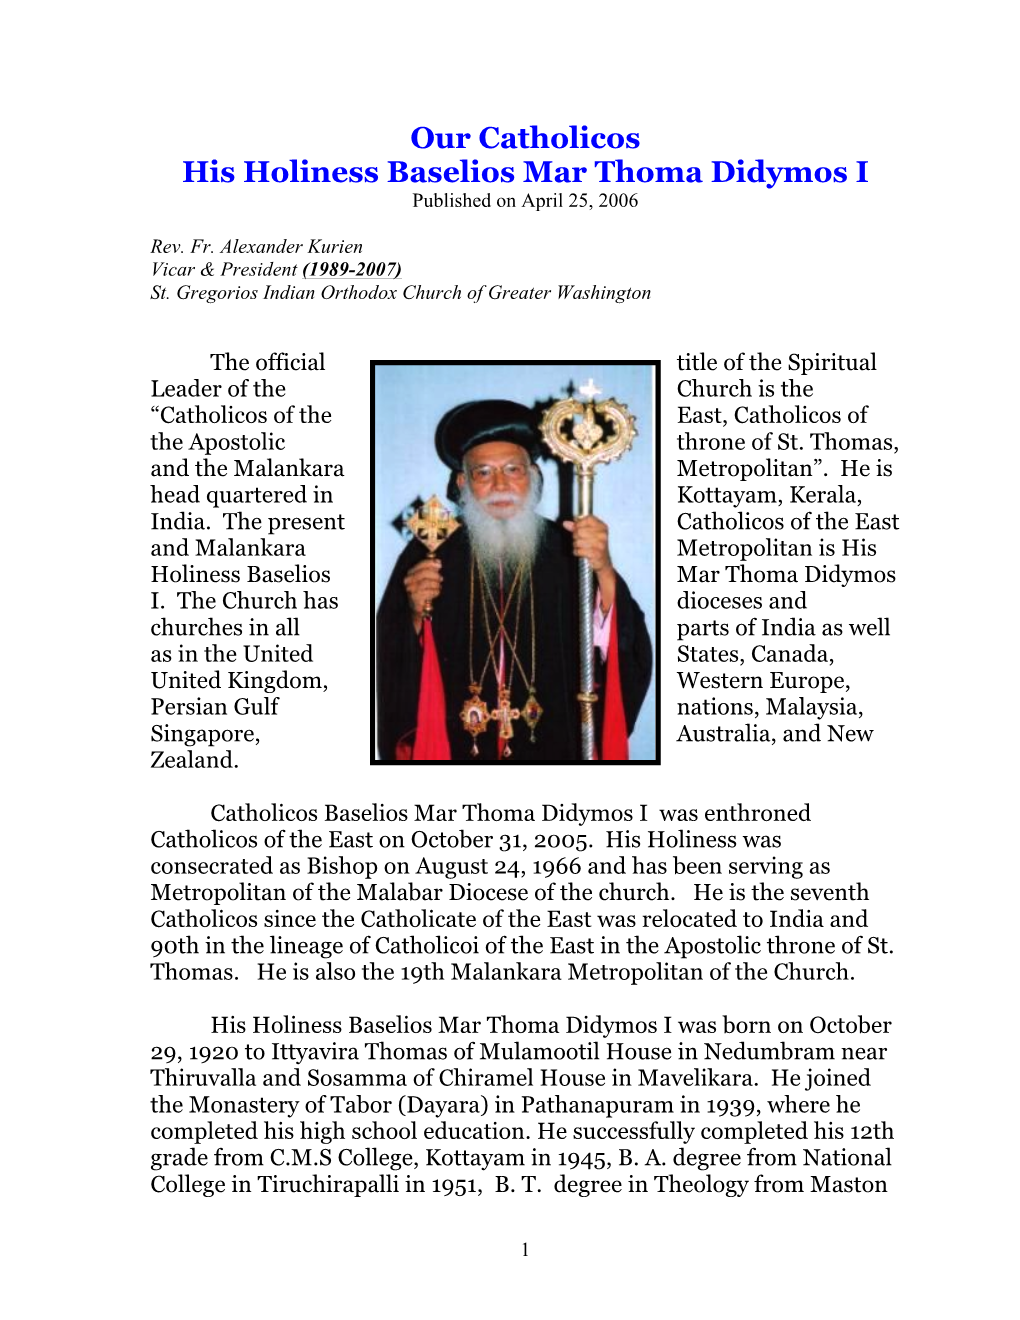 Our Catholicos His Holiness Baselios Mar Thoma Didymos I Published on April 25, 2006